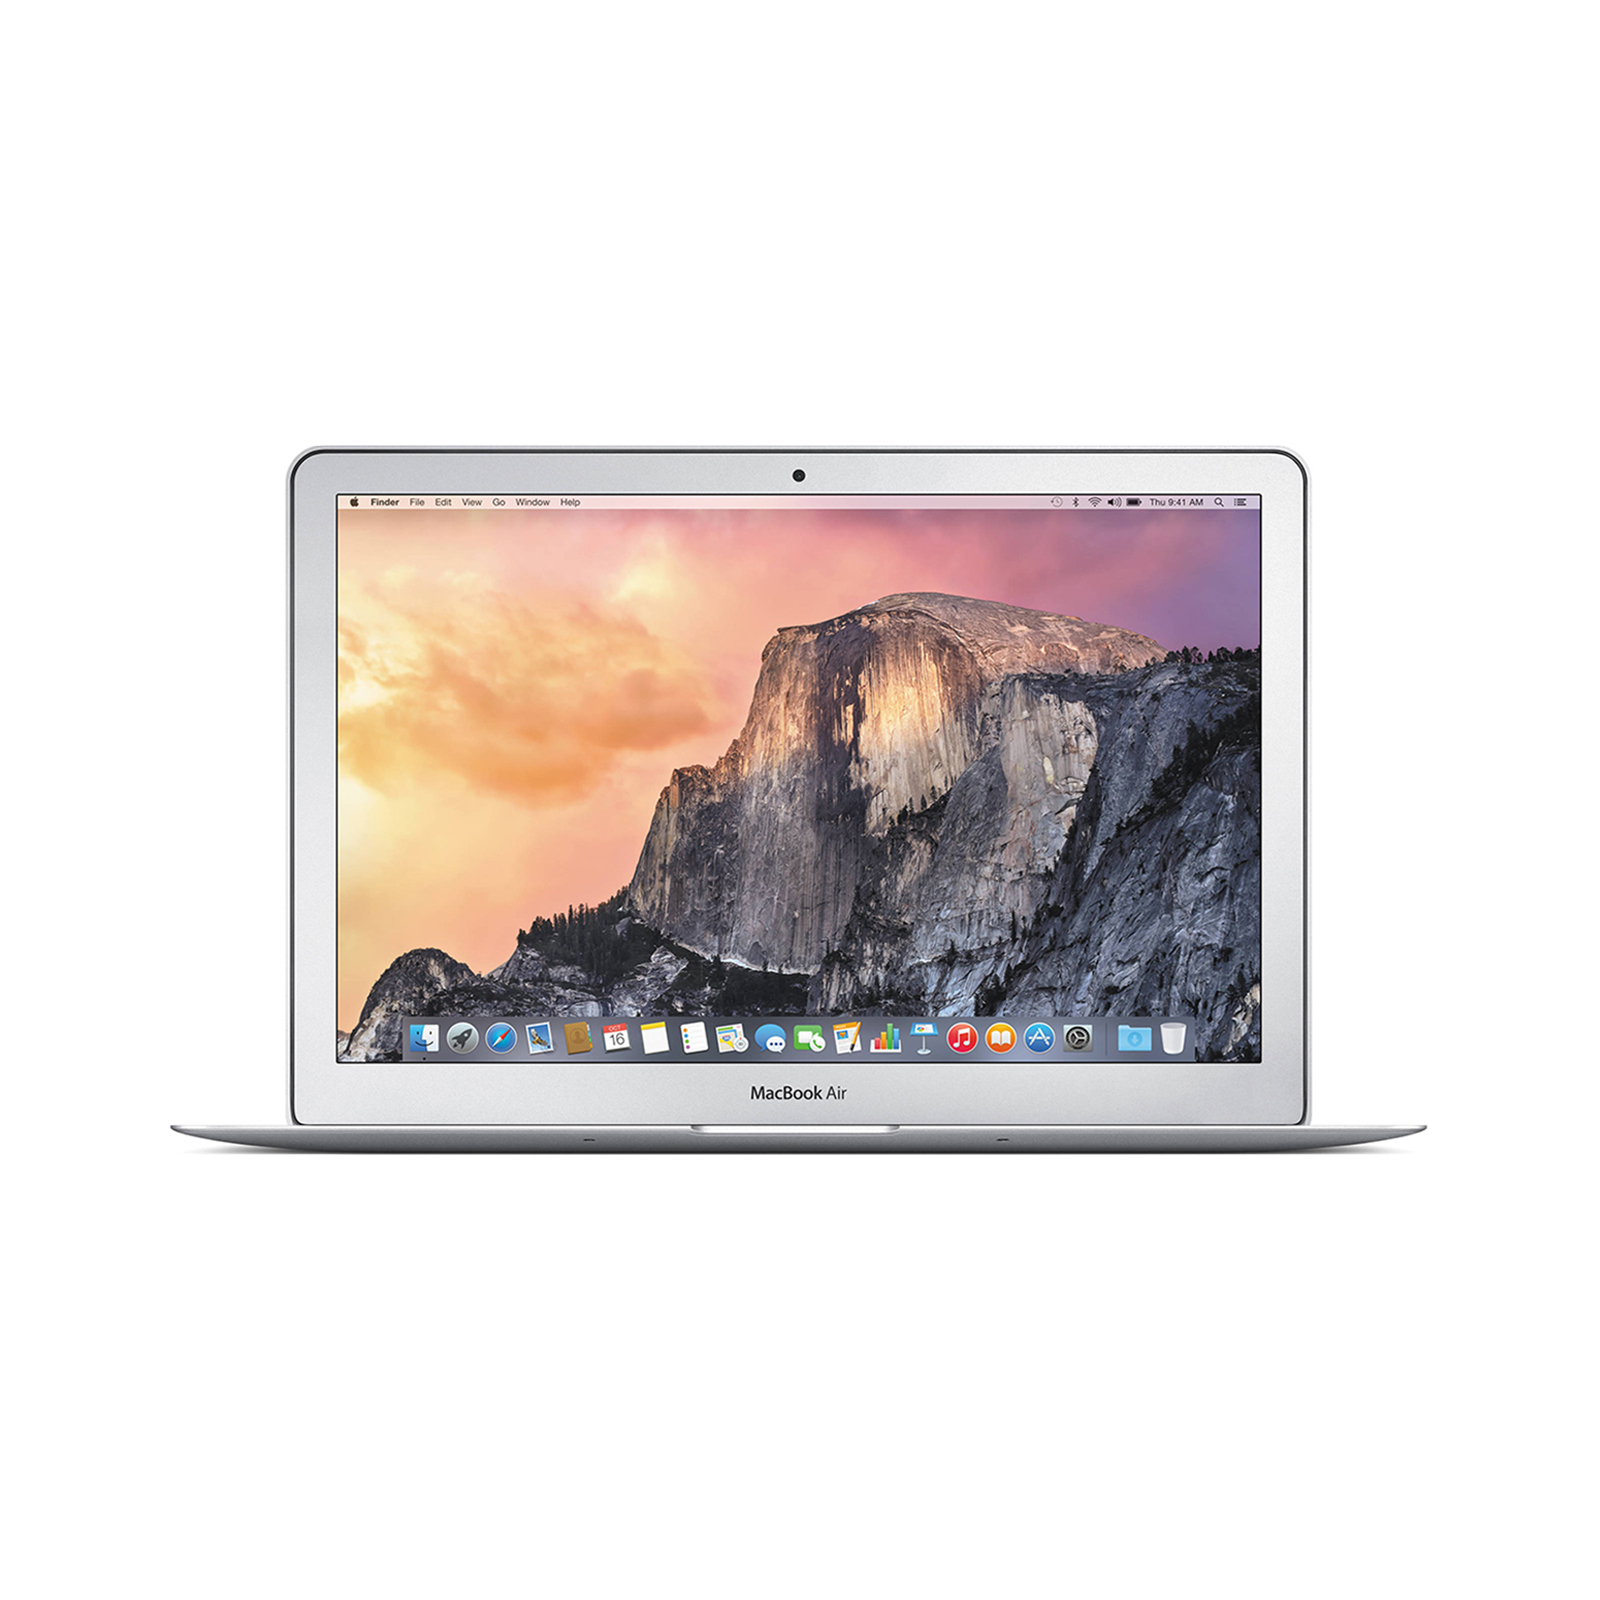 MacBook Air (11-inch, Early 2014) Intel Core i5 1.4 GHz 4GB 256GB